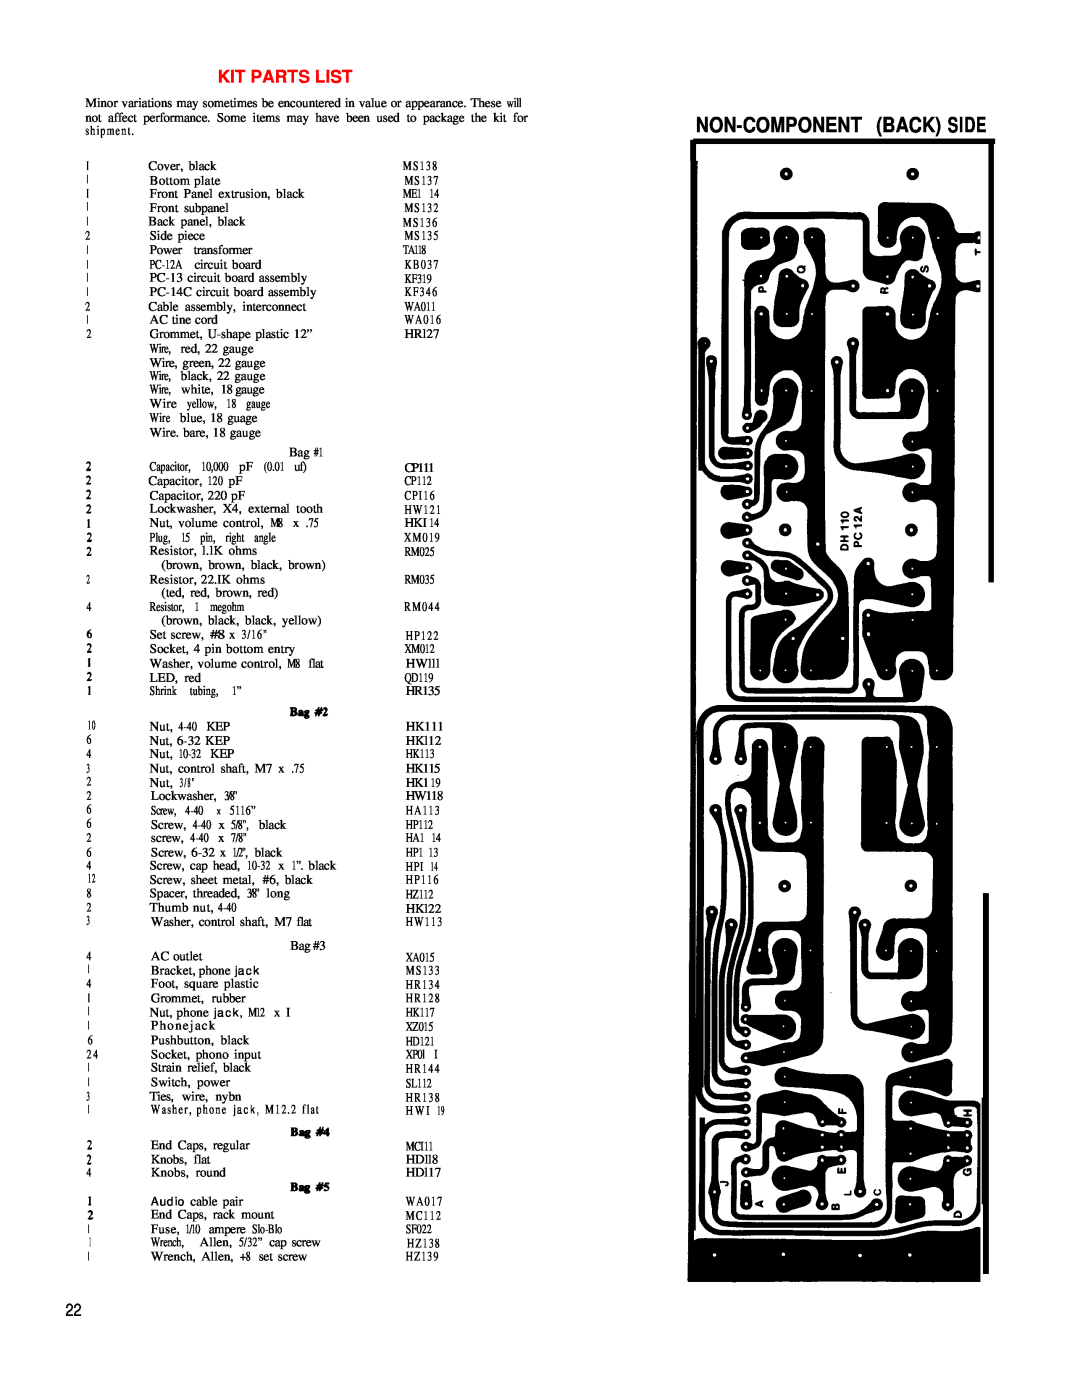 Hafler DH-110 manual Non-Componentback Side, Kit Parts List 